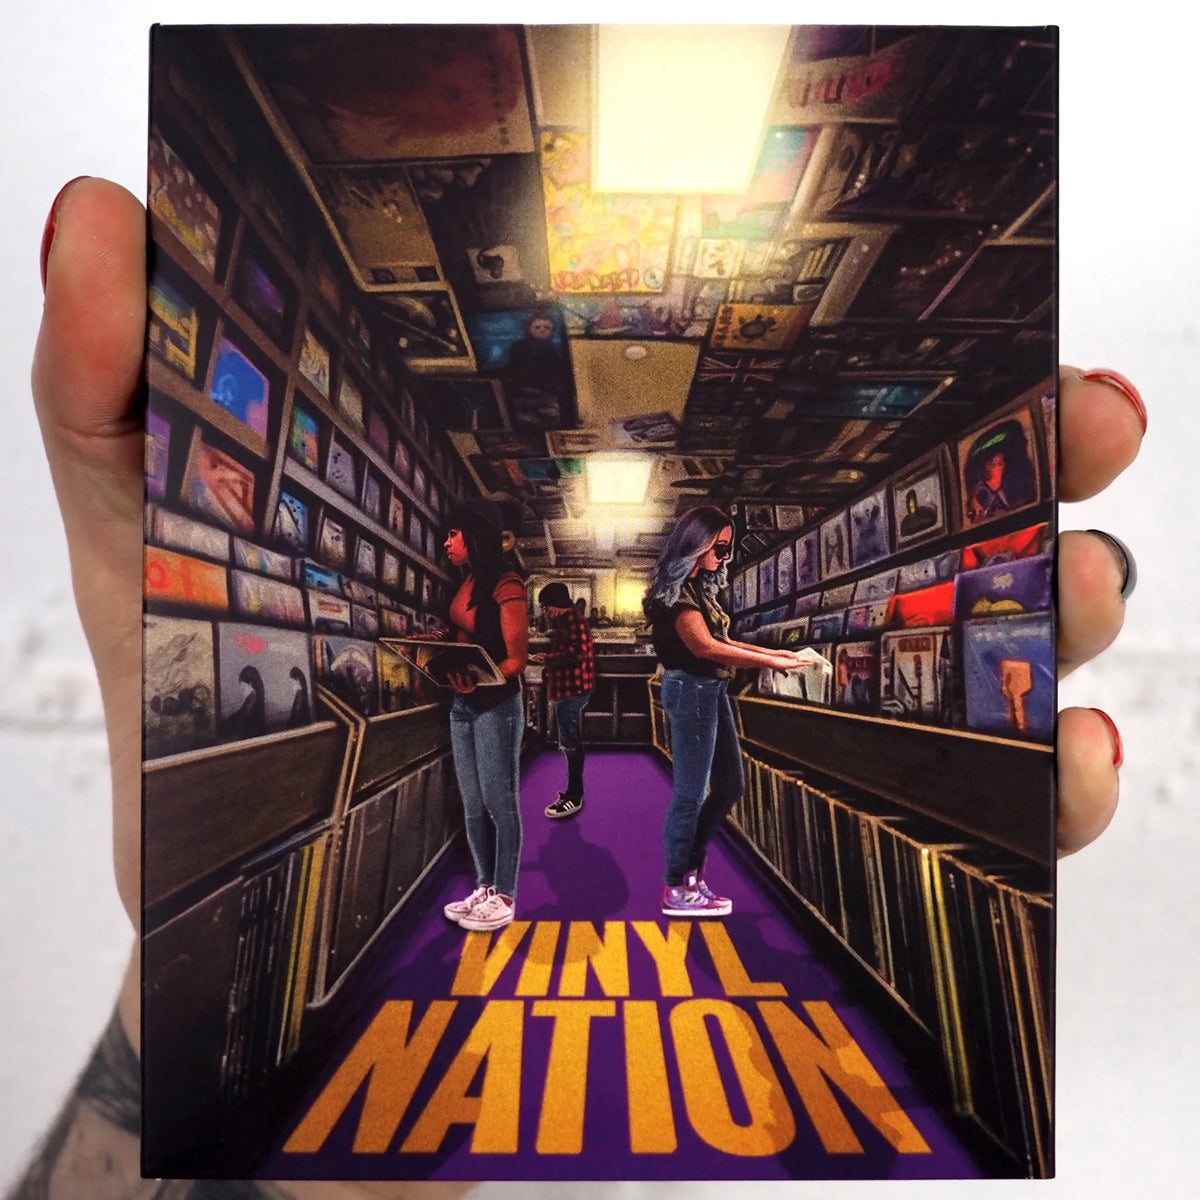 Vinyl Nation Blu Ray (ETRM010)